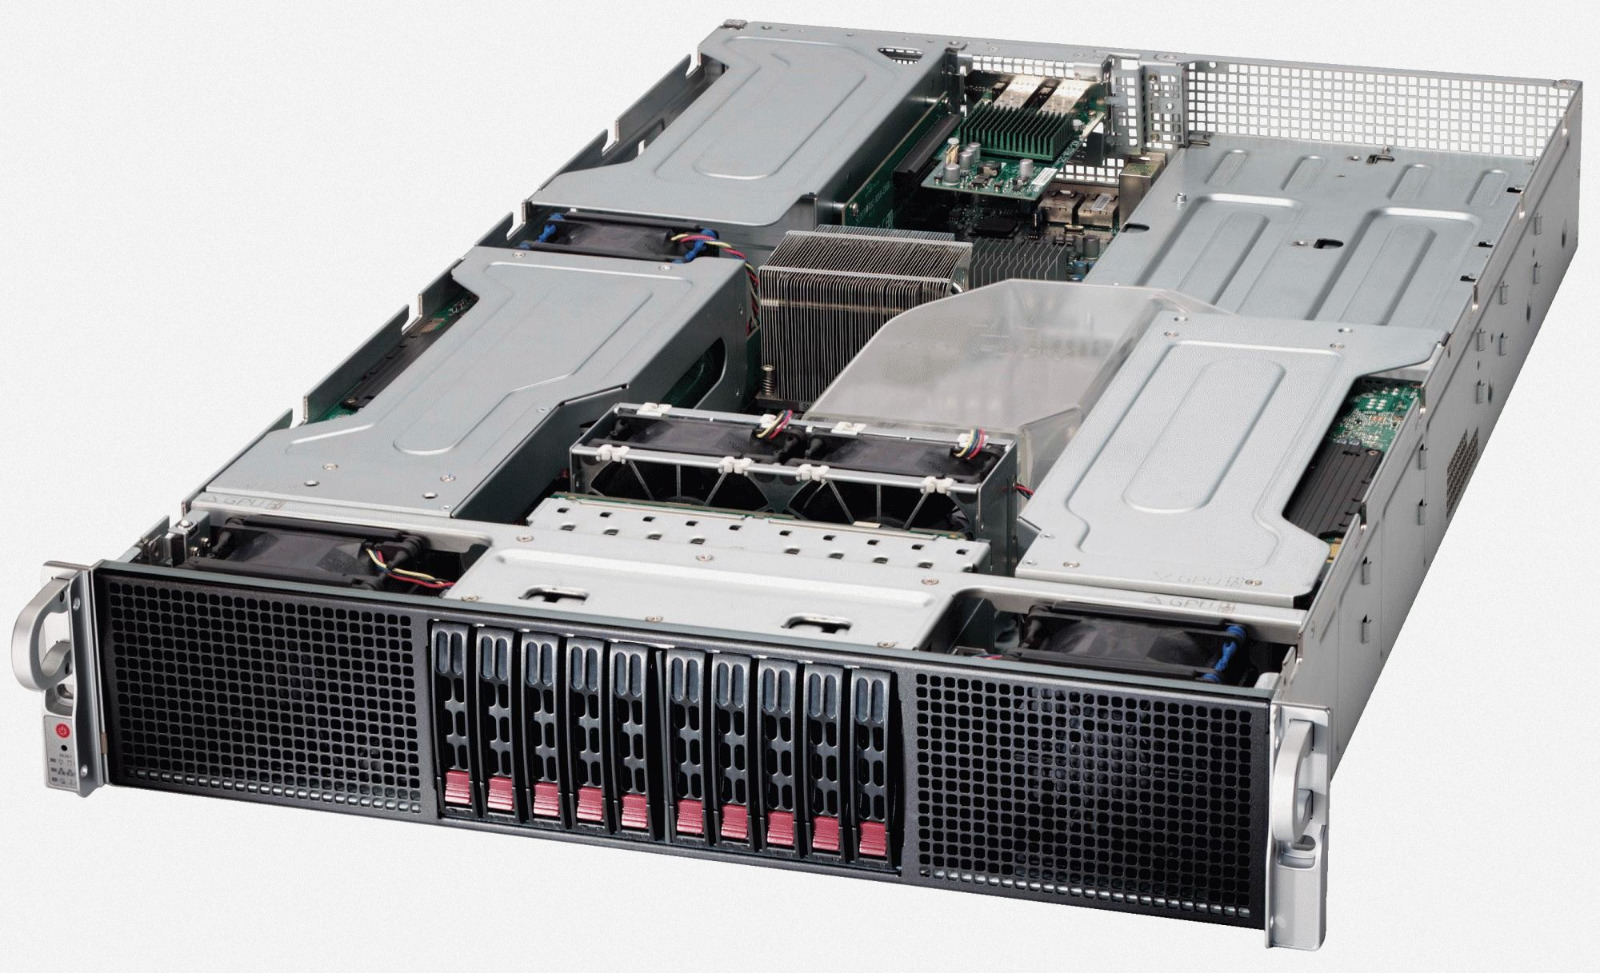 Supermicro SYS-2027GR-TRF GPU Barebones Server X9DRG-HF NEW IN STOCK 5 Yr Wty